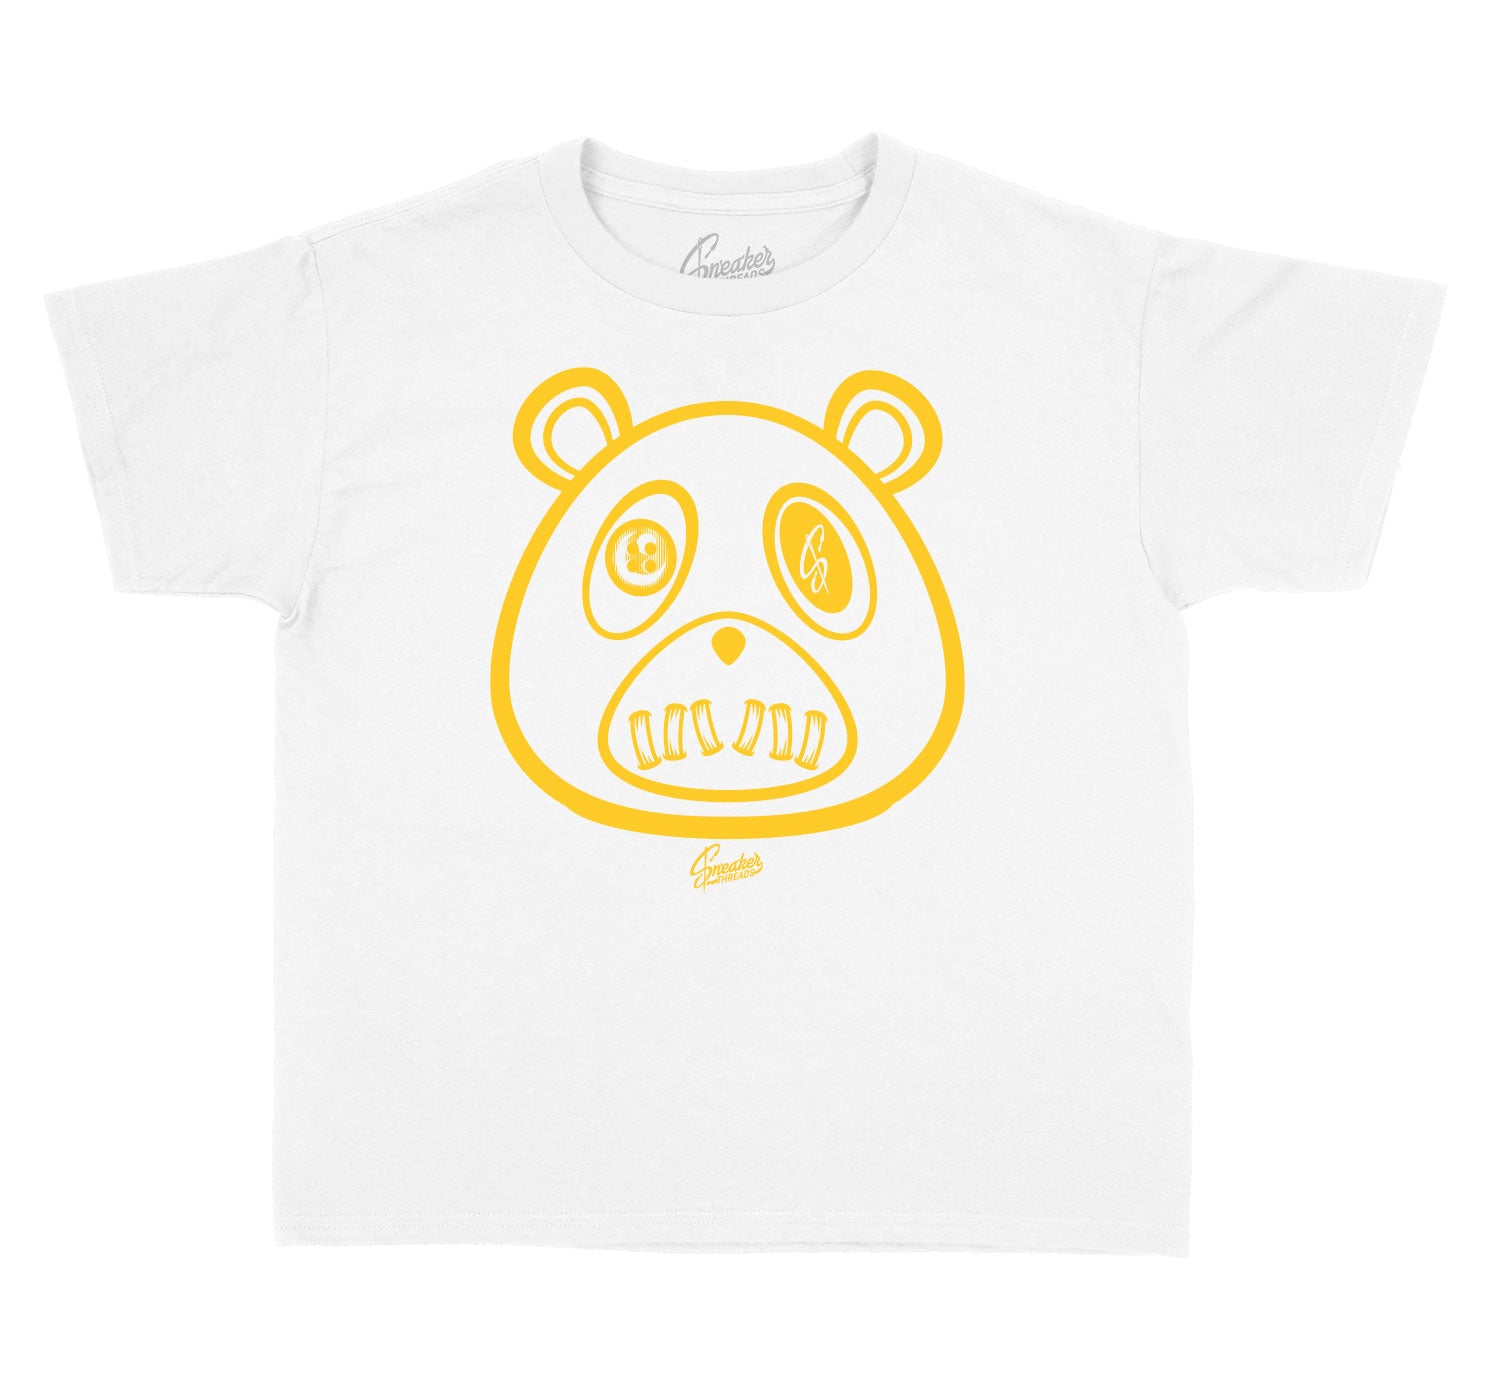 Kids Citrus 11 Shirt - ST Bear - White